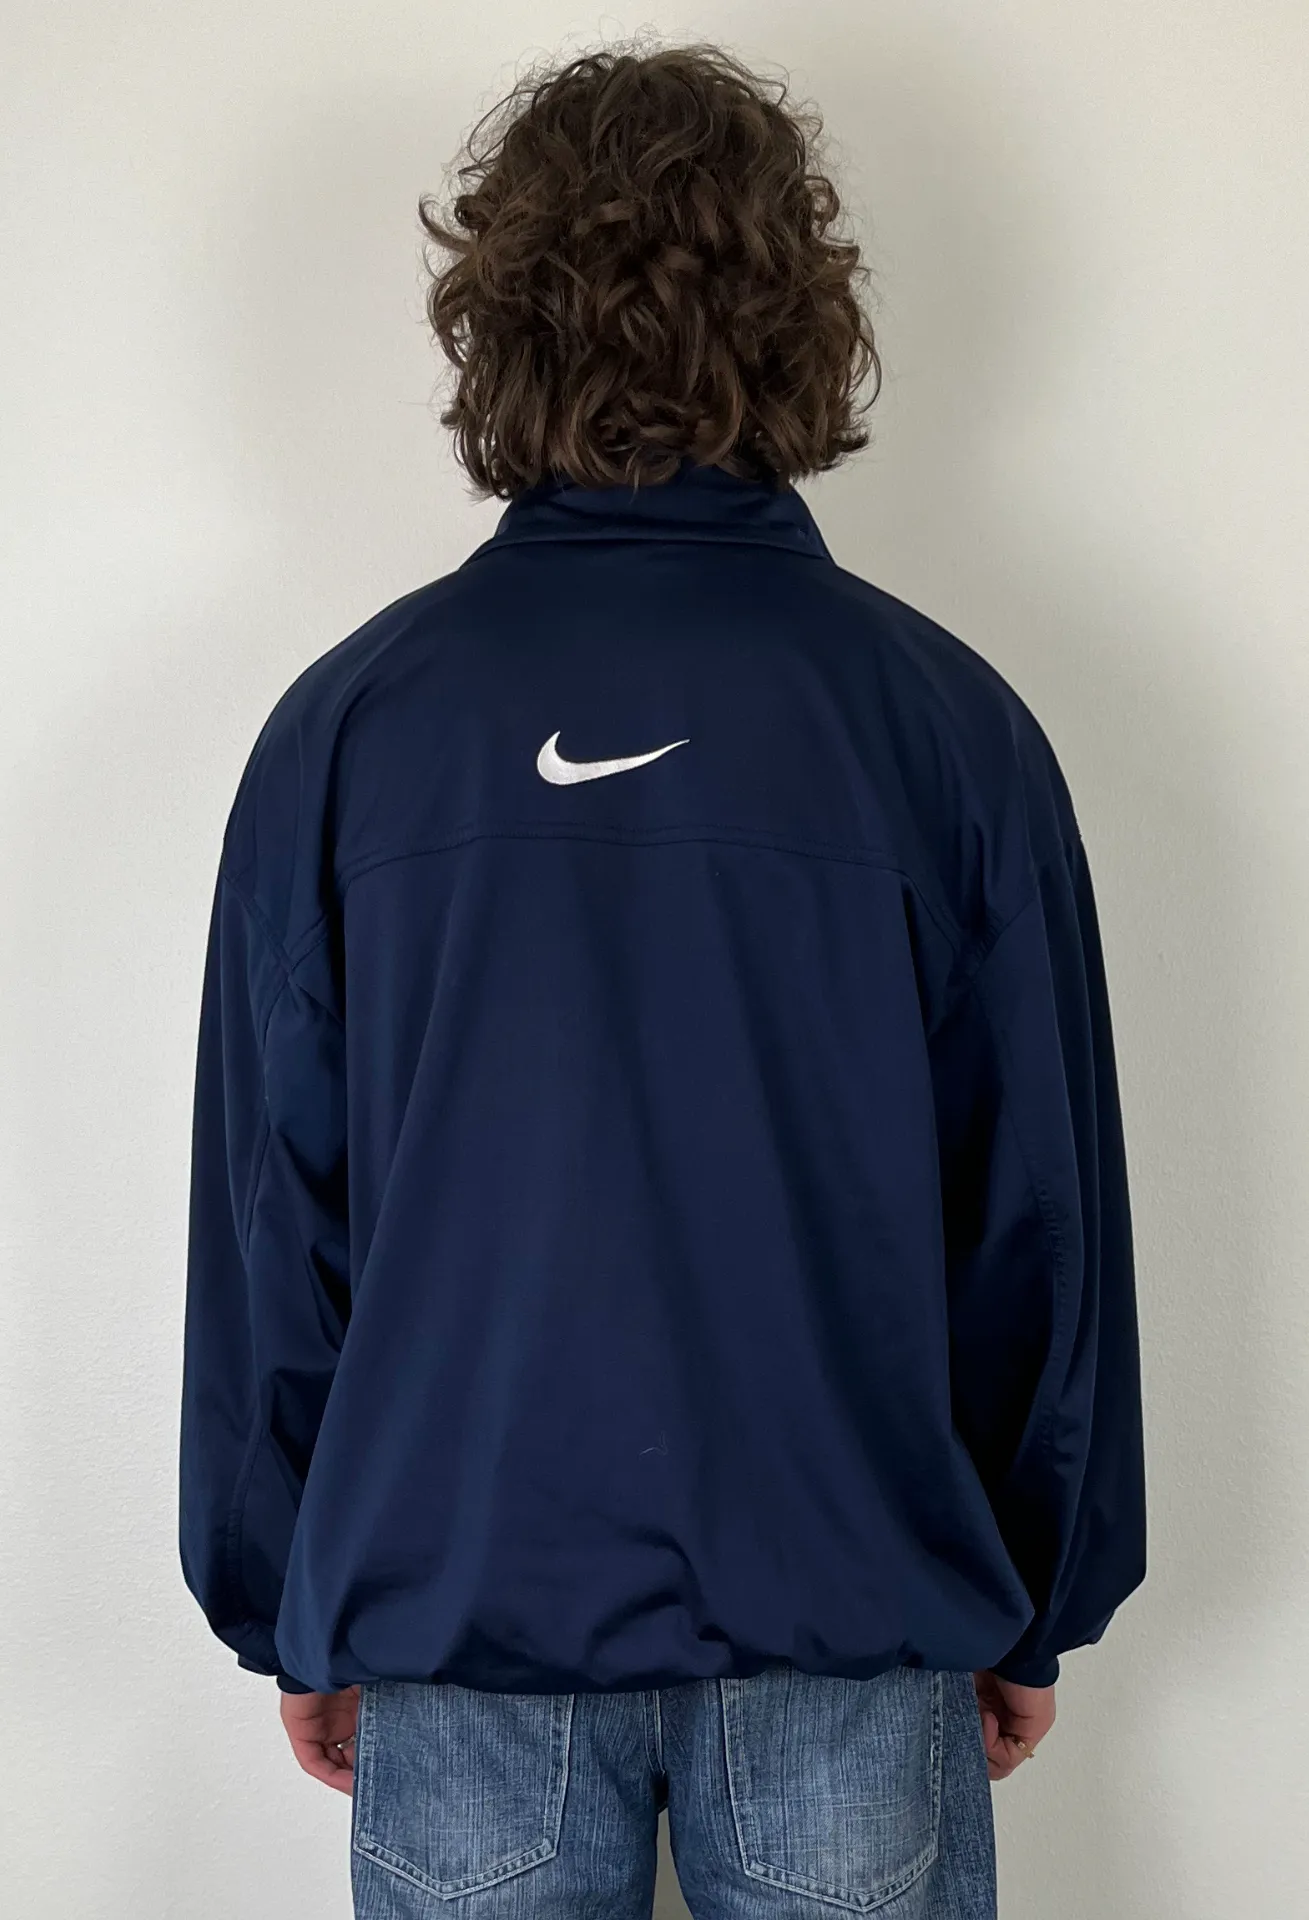 Nike - Navy Athletic Jacket (XL)